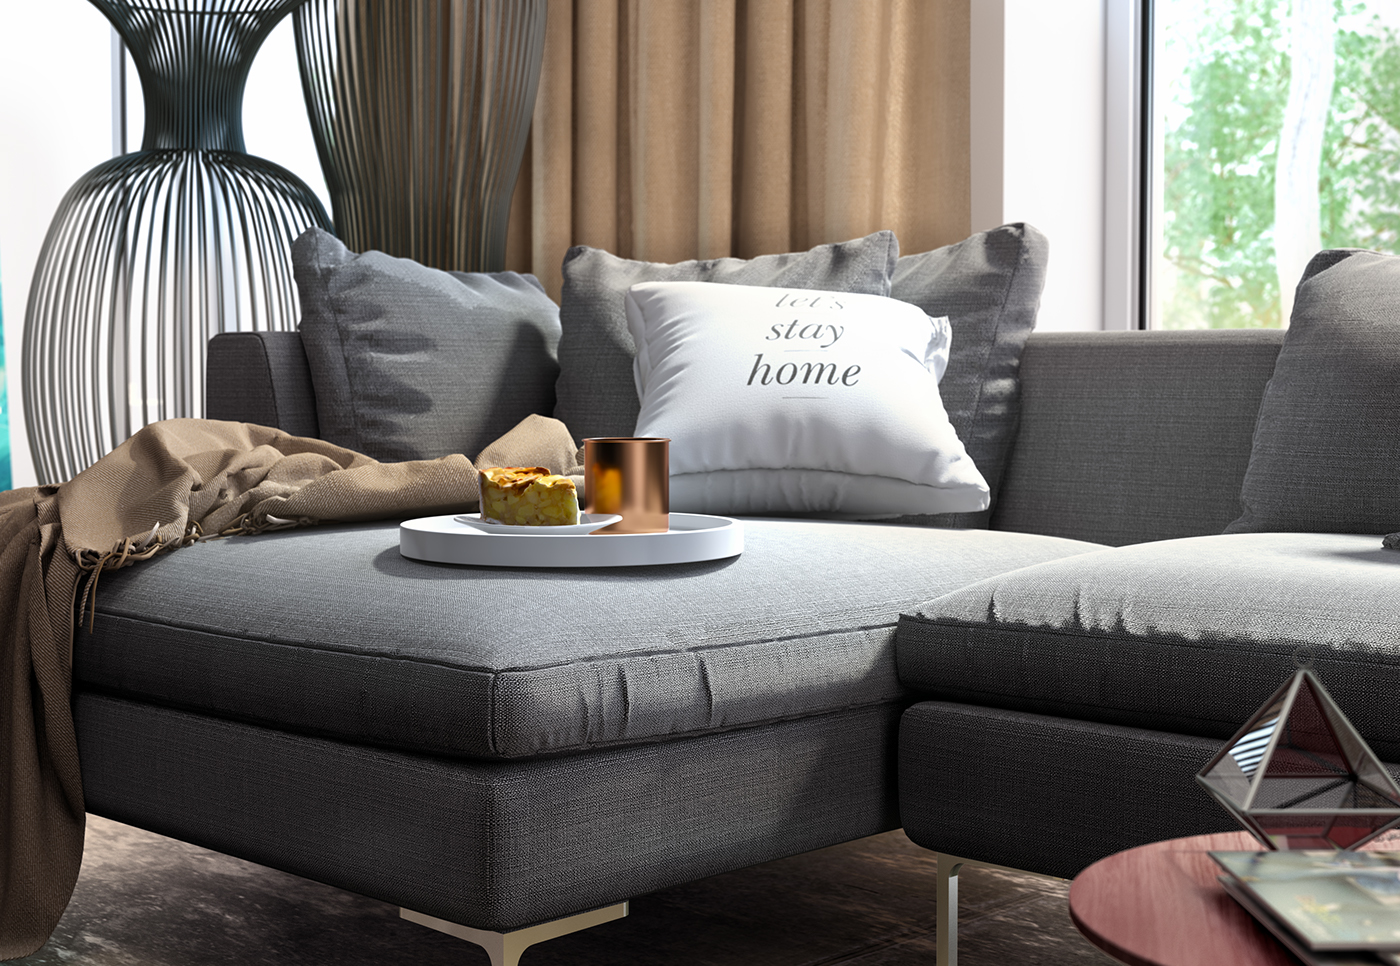 #Design #interior #sofa #cgi #Renders #vray